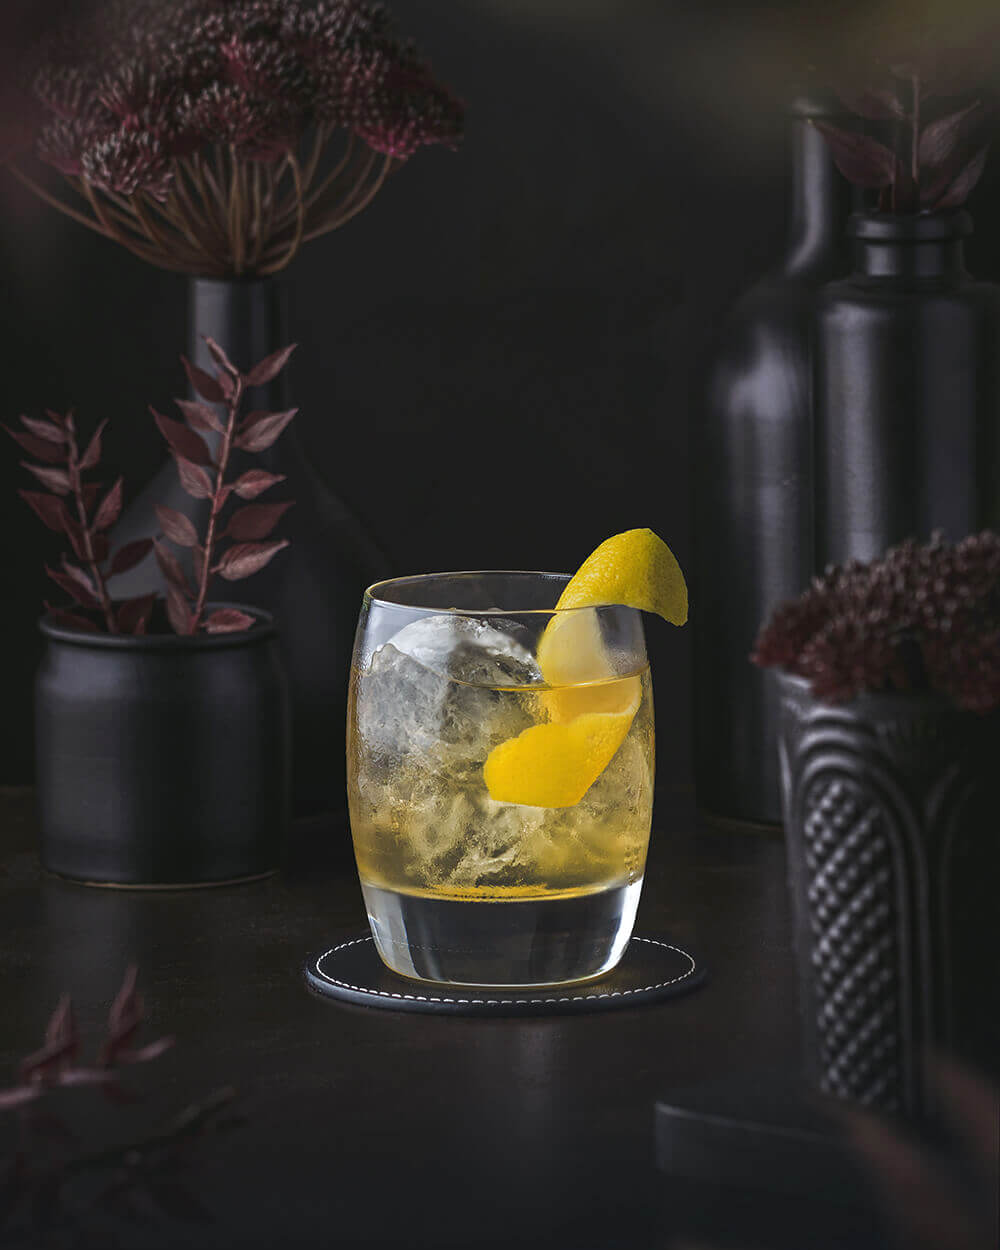 Padovani Cocktail – Scotch with Elderflower